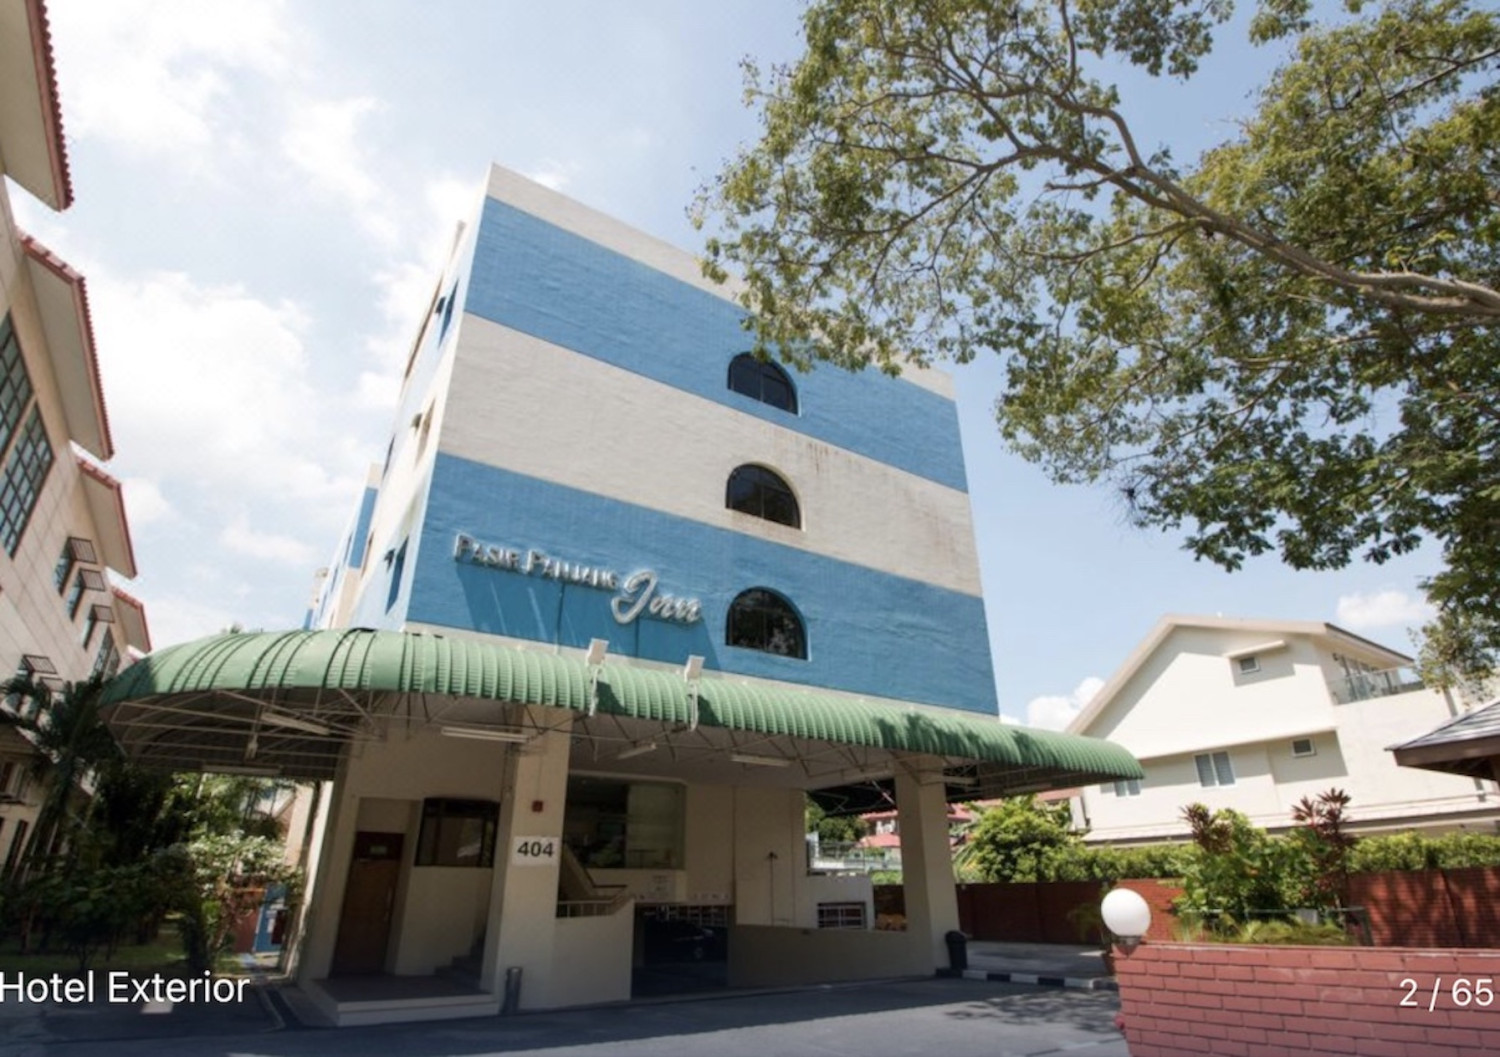 LHN Group acquires Pasir Panjang Inn for $30 mil - Property News